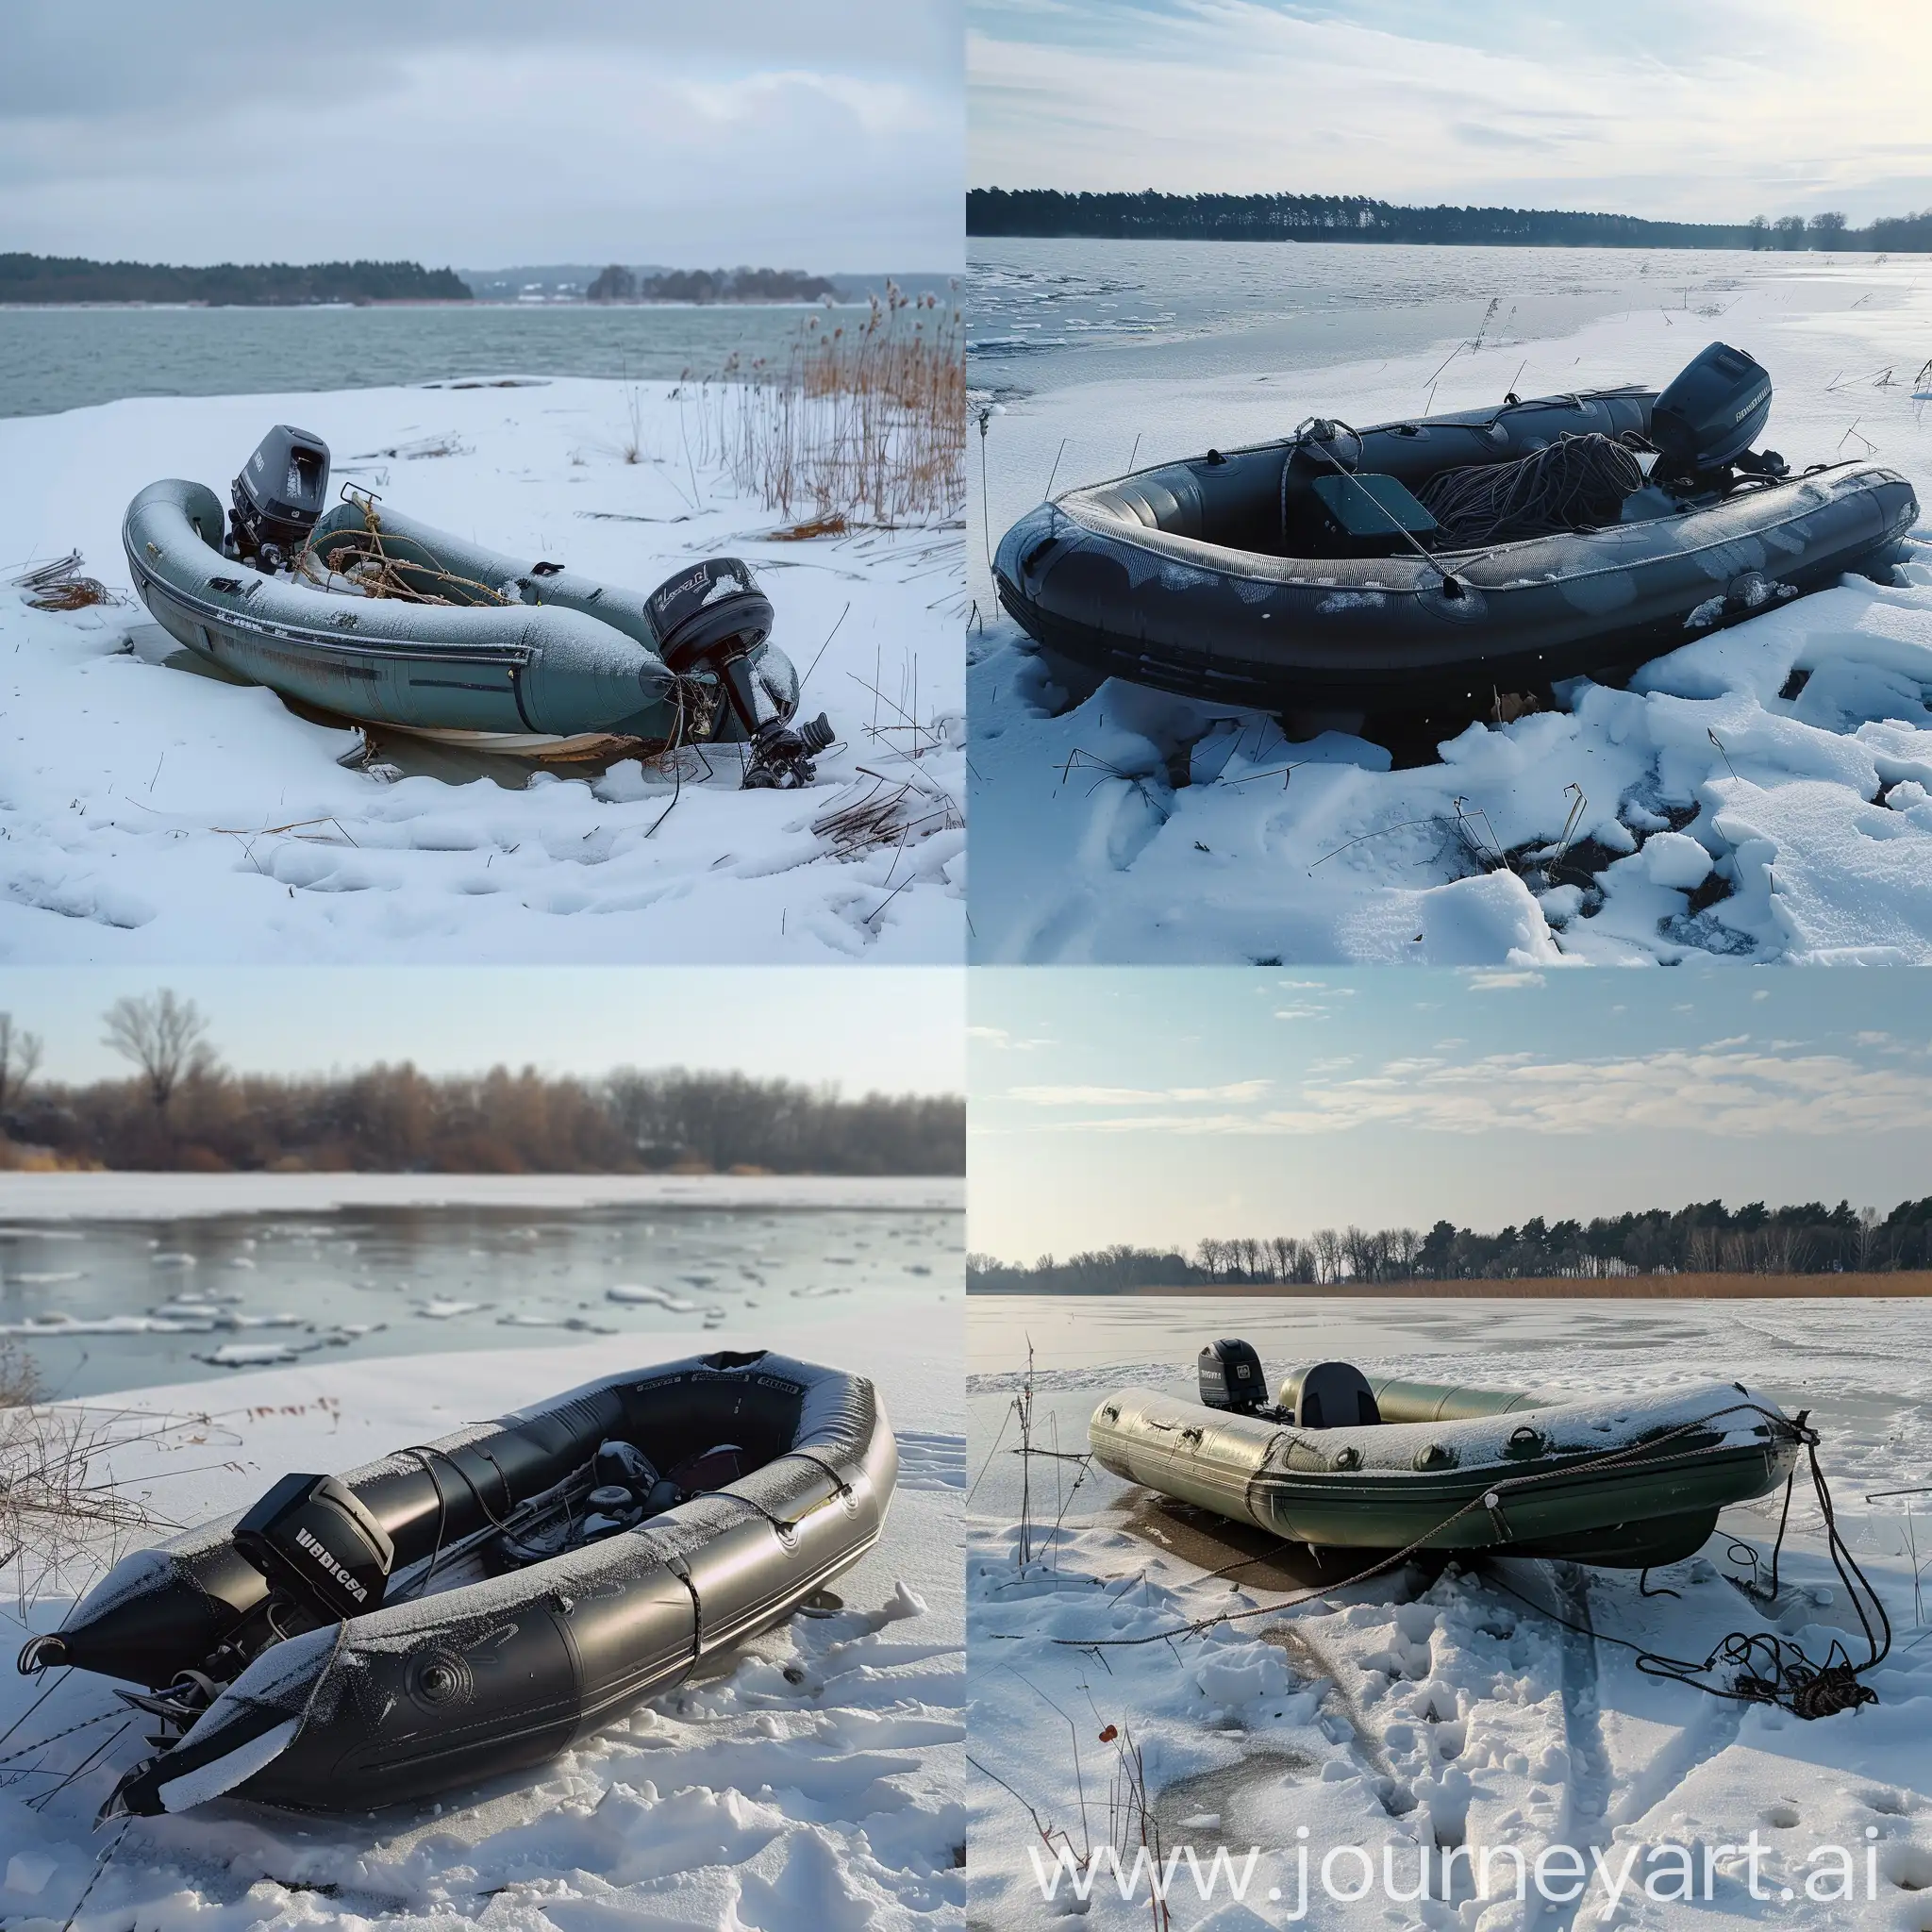 Snowy-Lake-PVC-Boat-Overturn-Wintery-Water-Adventure-Mishap